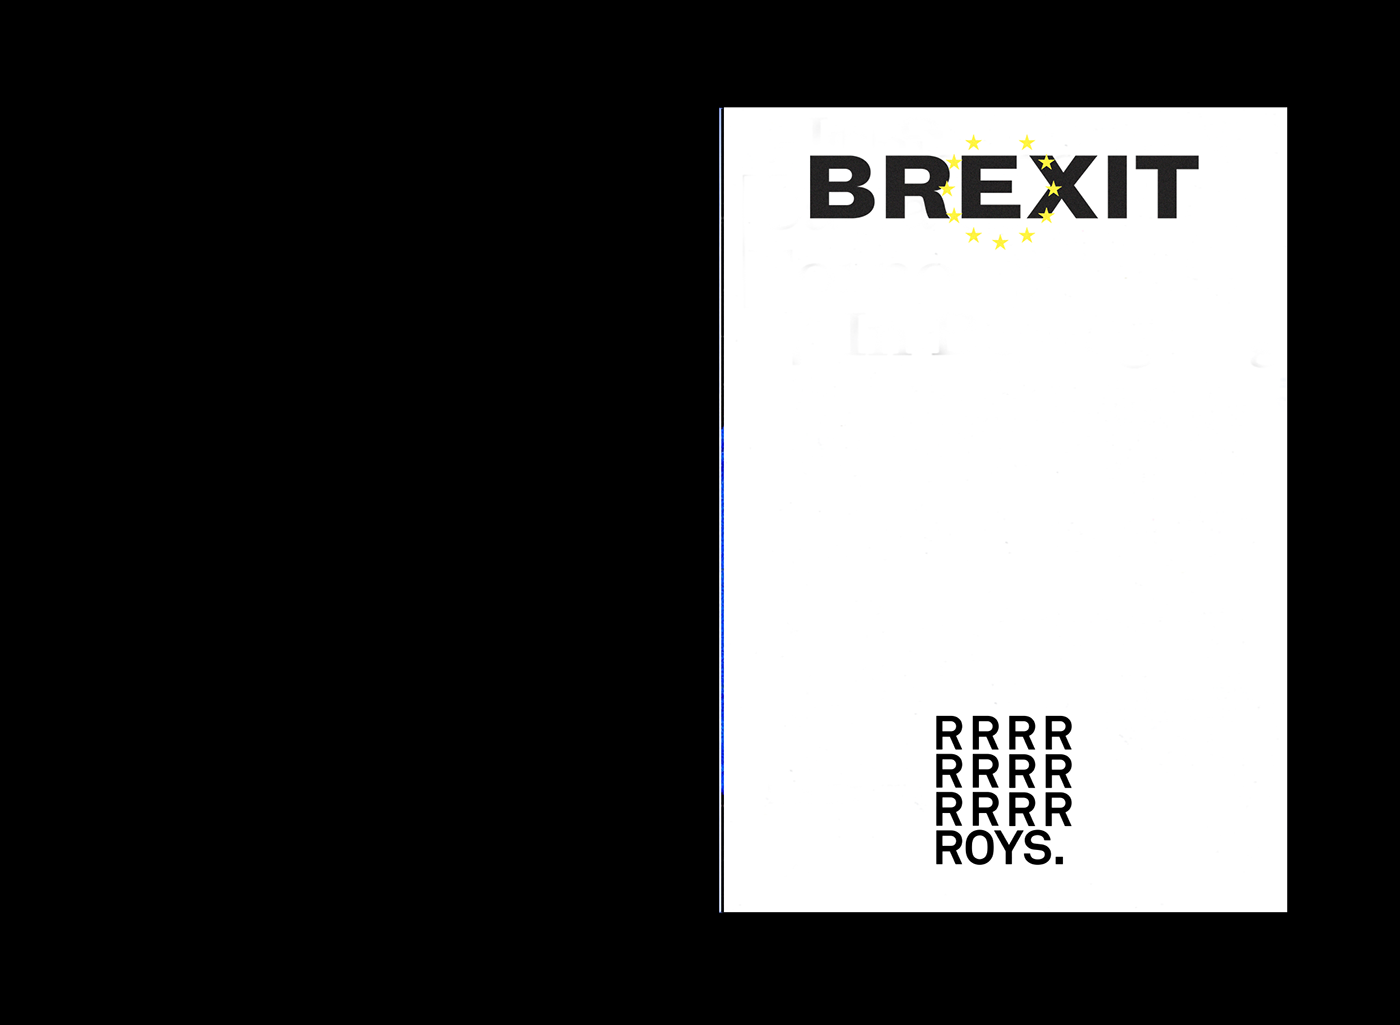 Exhibition  Brexit brexit zine editorial Kiosk kiosk book book design Kiosk Independent Publishers Fair roys room